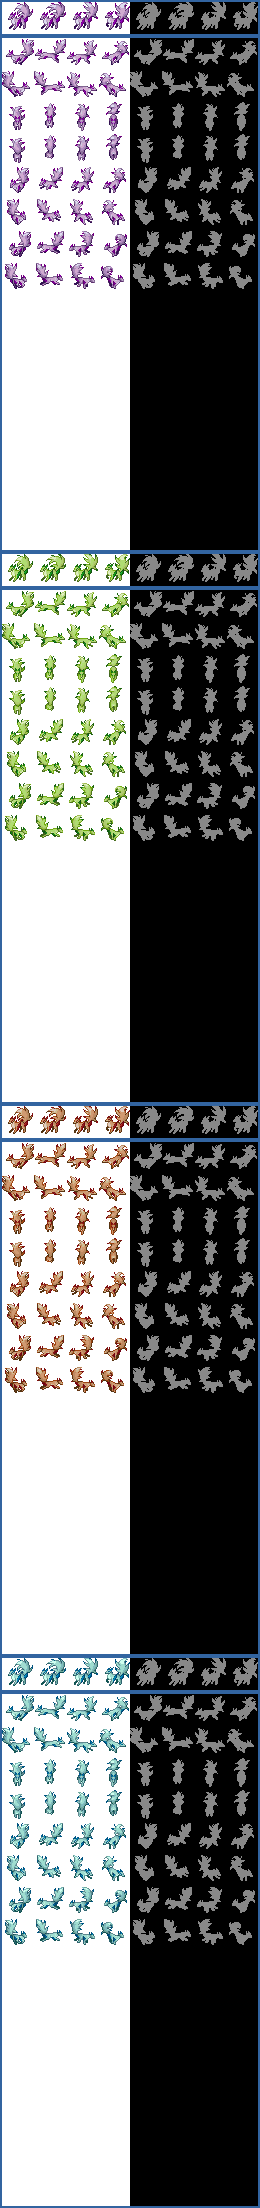 Fire Emblem: Fates - Nine-Tails Form